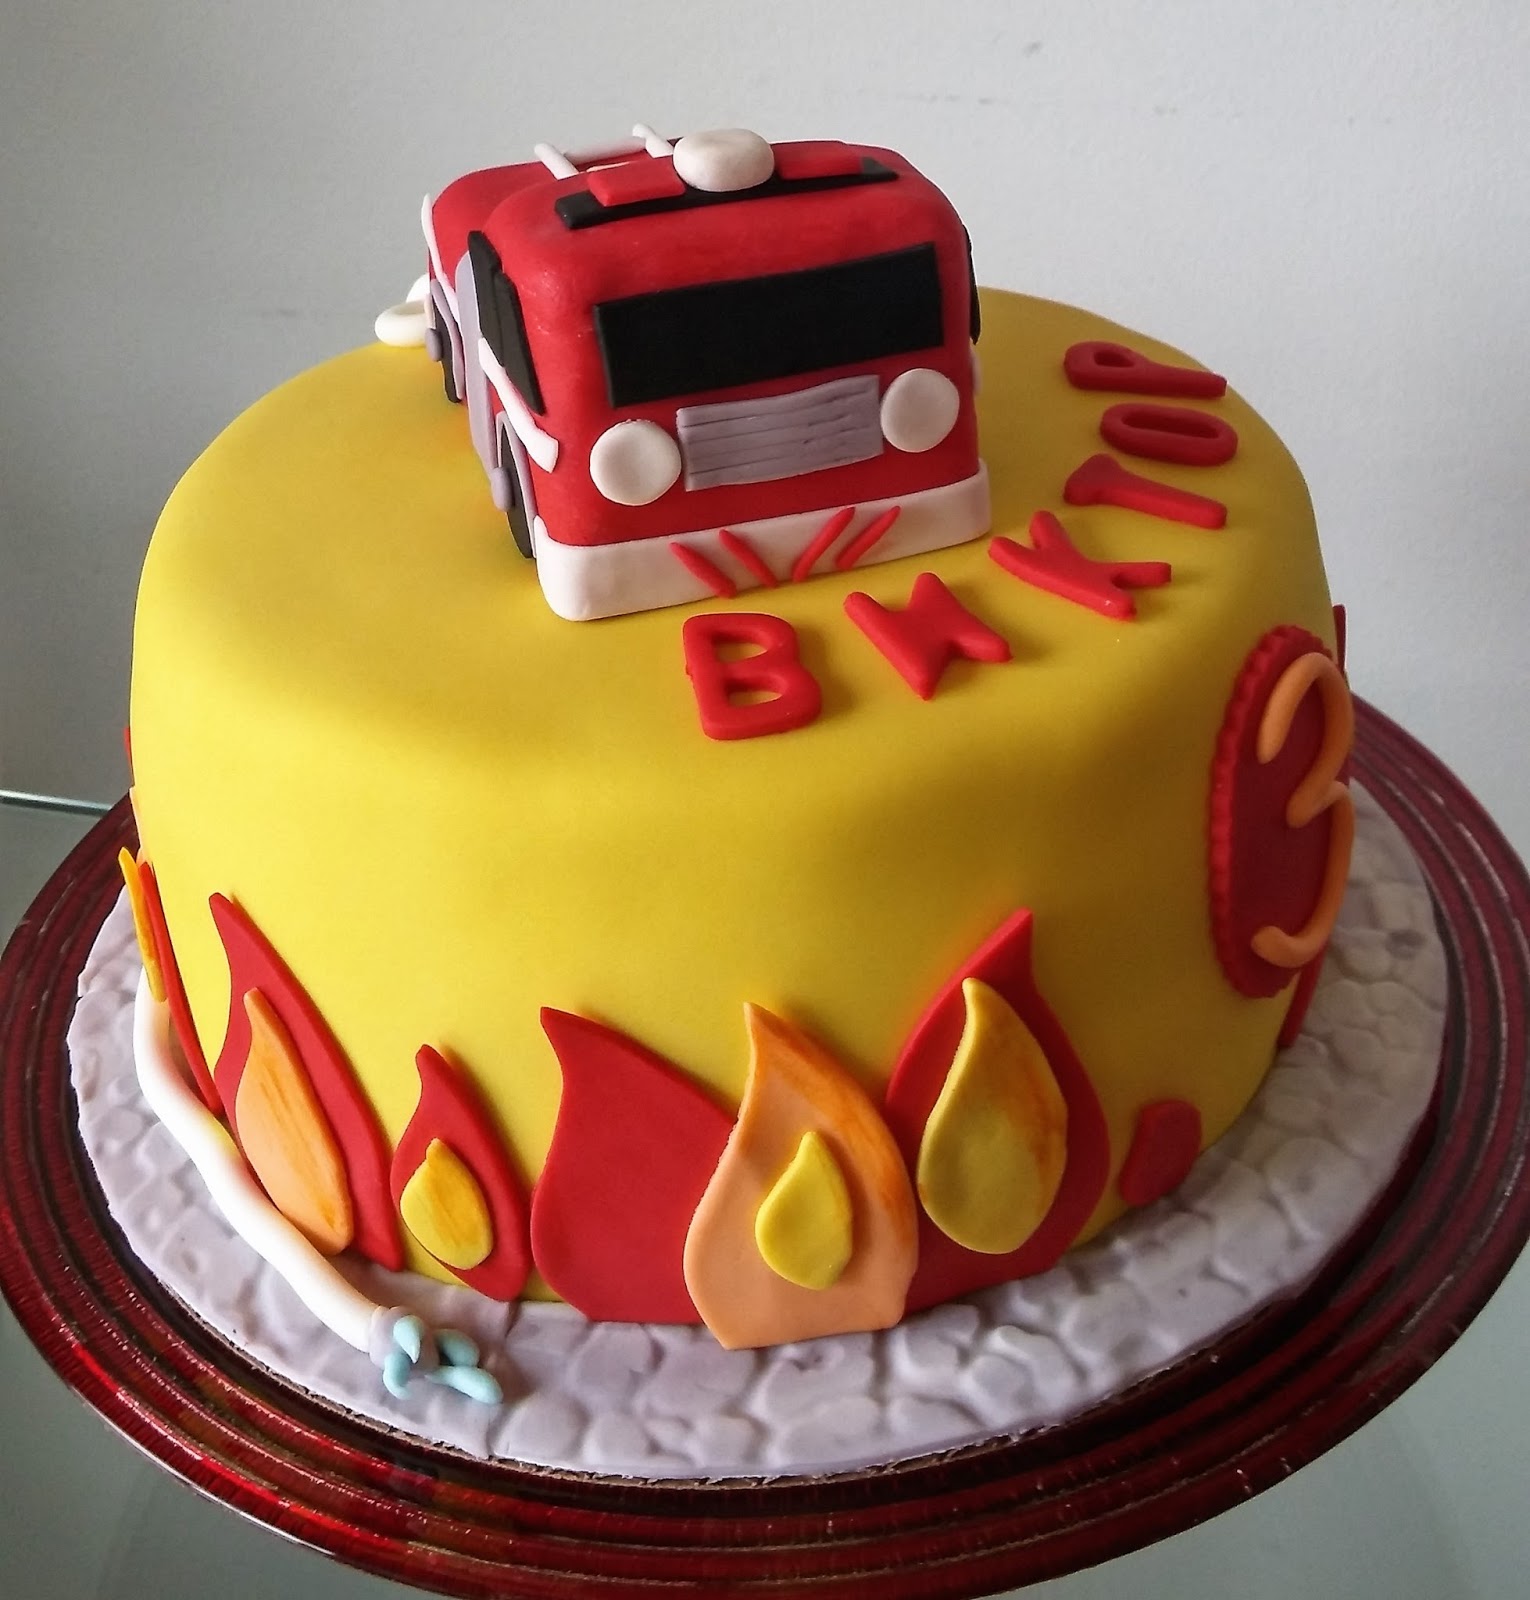 Fire Truck Cake Featured Cake, A Customize Featured cake